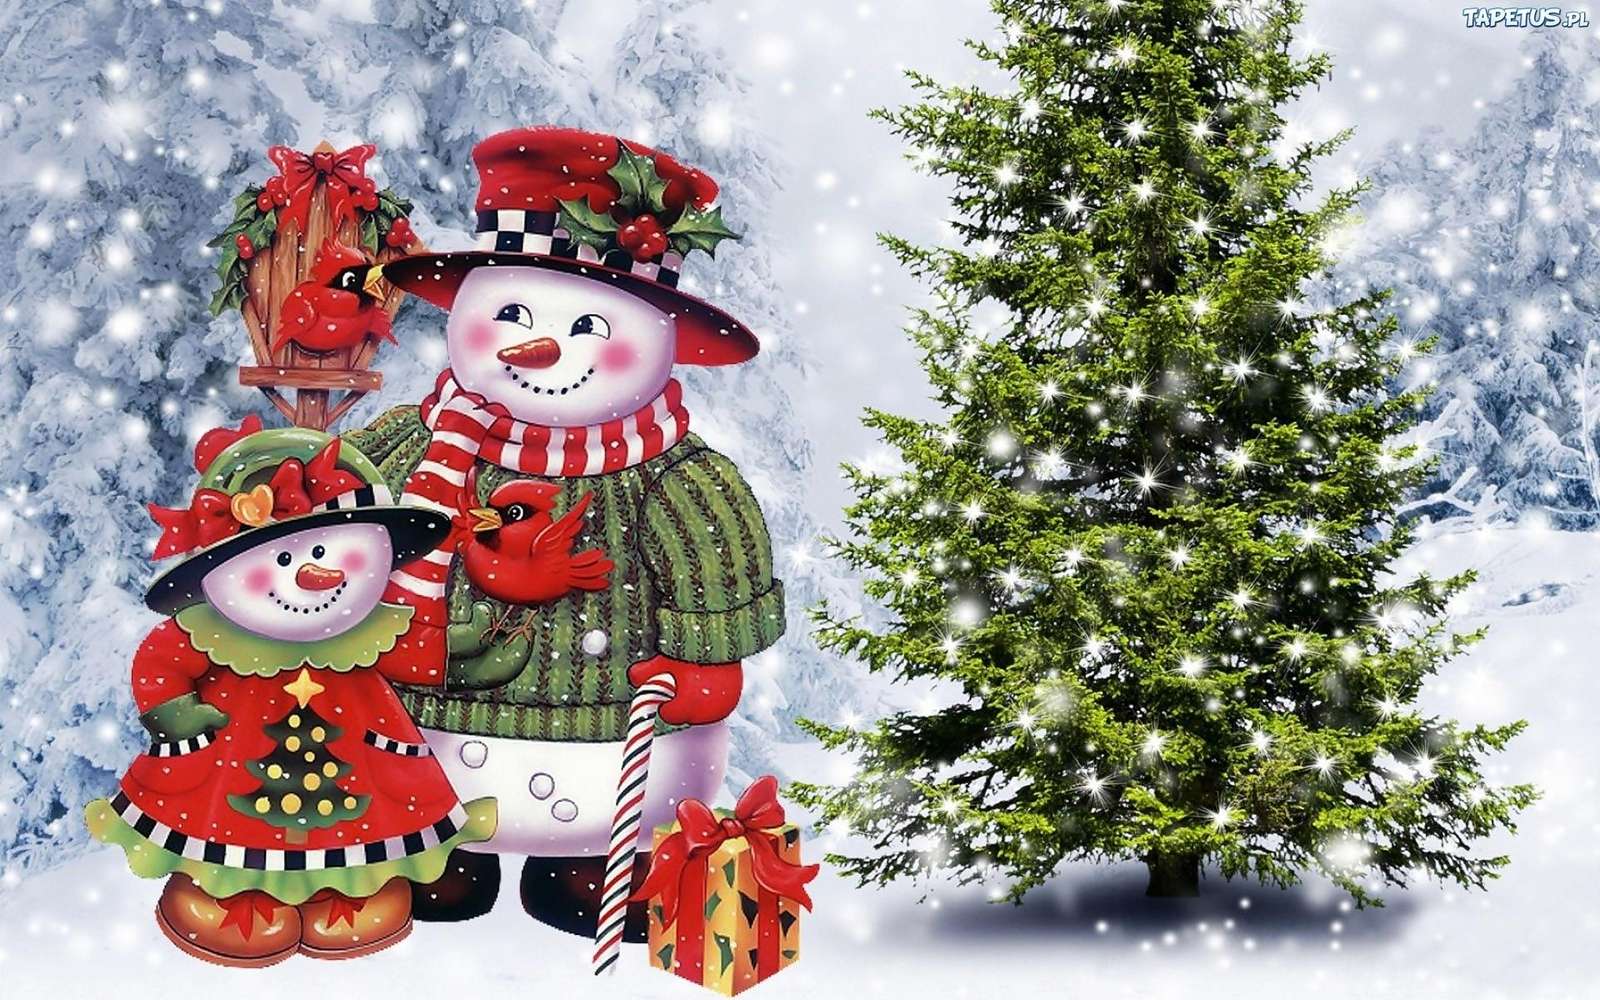 festivo, scena natalizia puzzle online